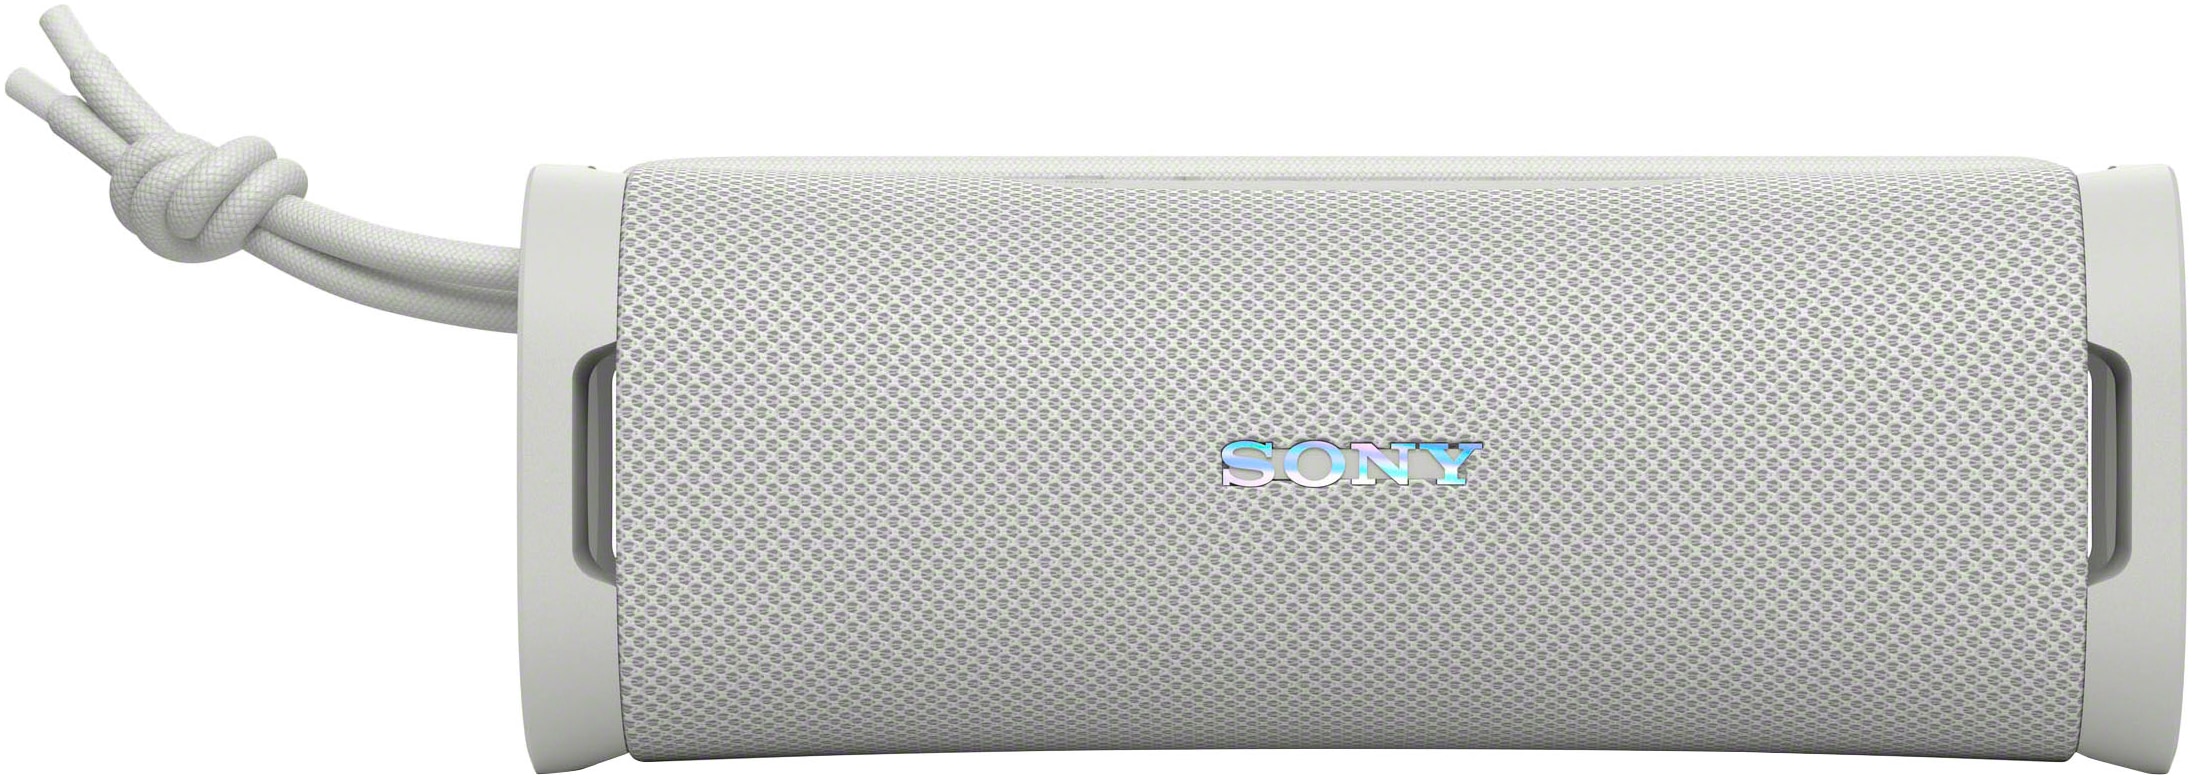 Sony Bluetooth-Lautsprecher »ULT FIELD 1«, Wasserdicht, Staubdicht, Stoßfest, 12 Stunden Batterielaufzeit